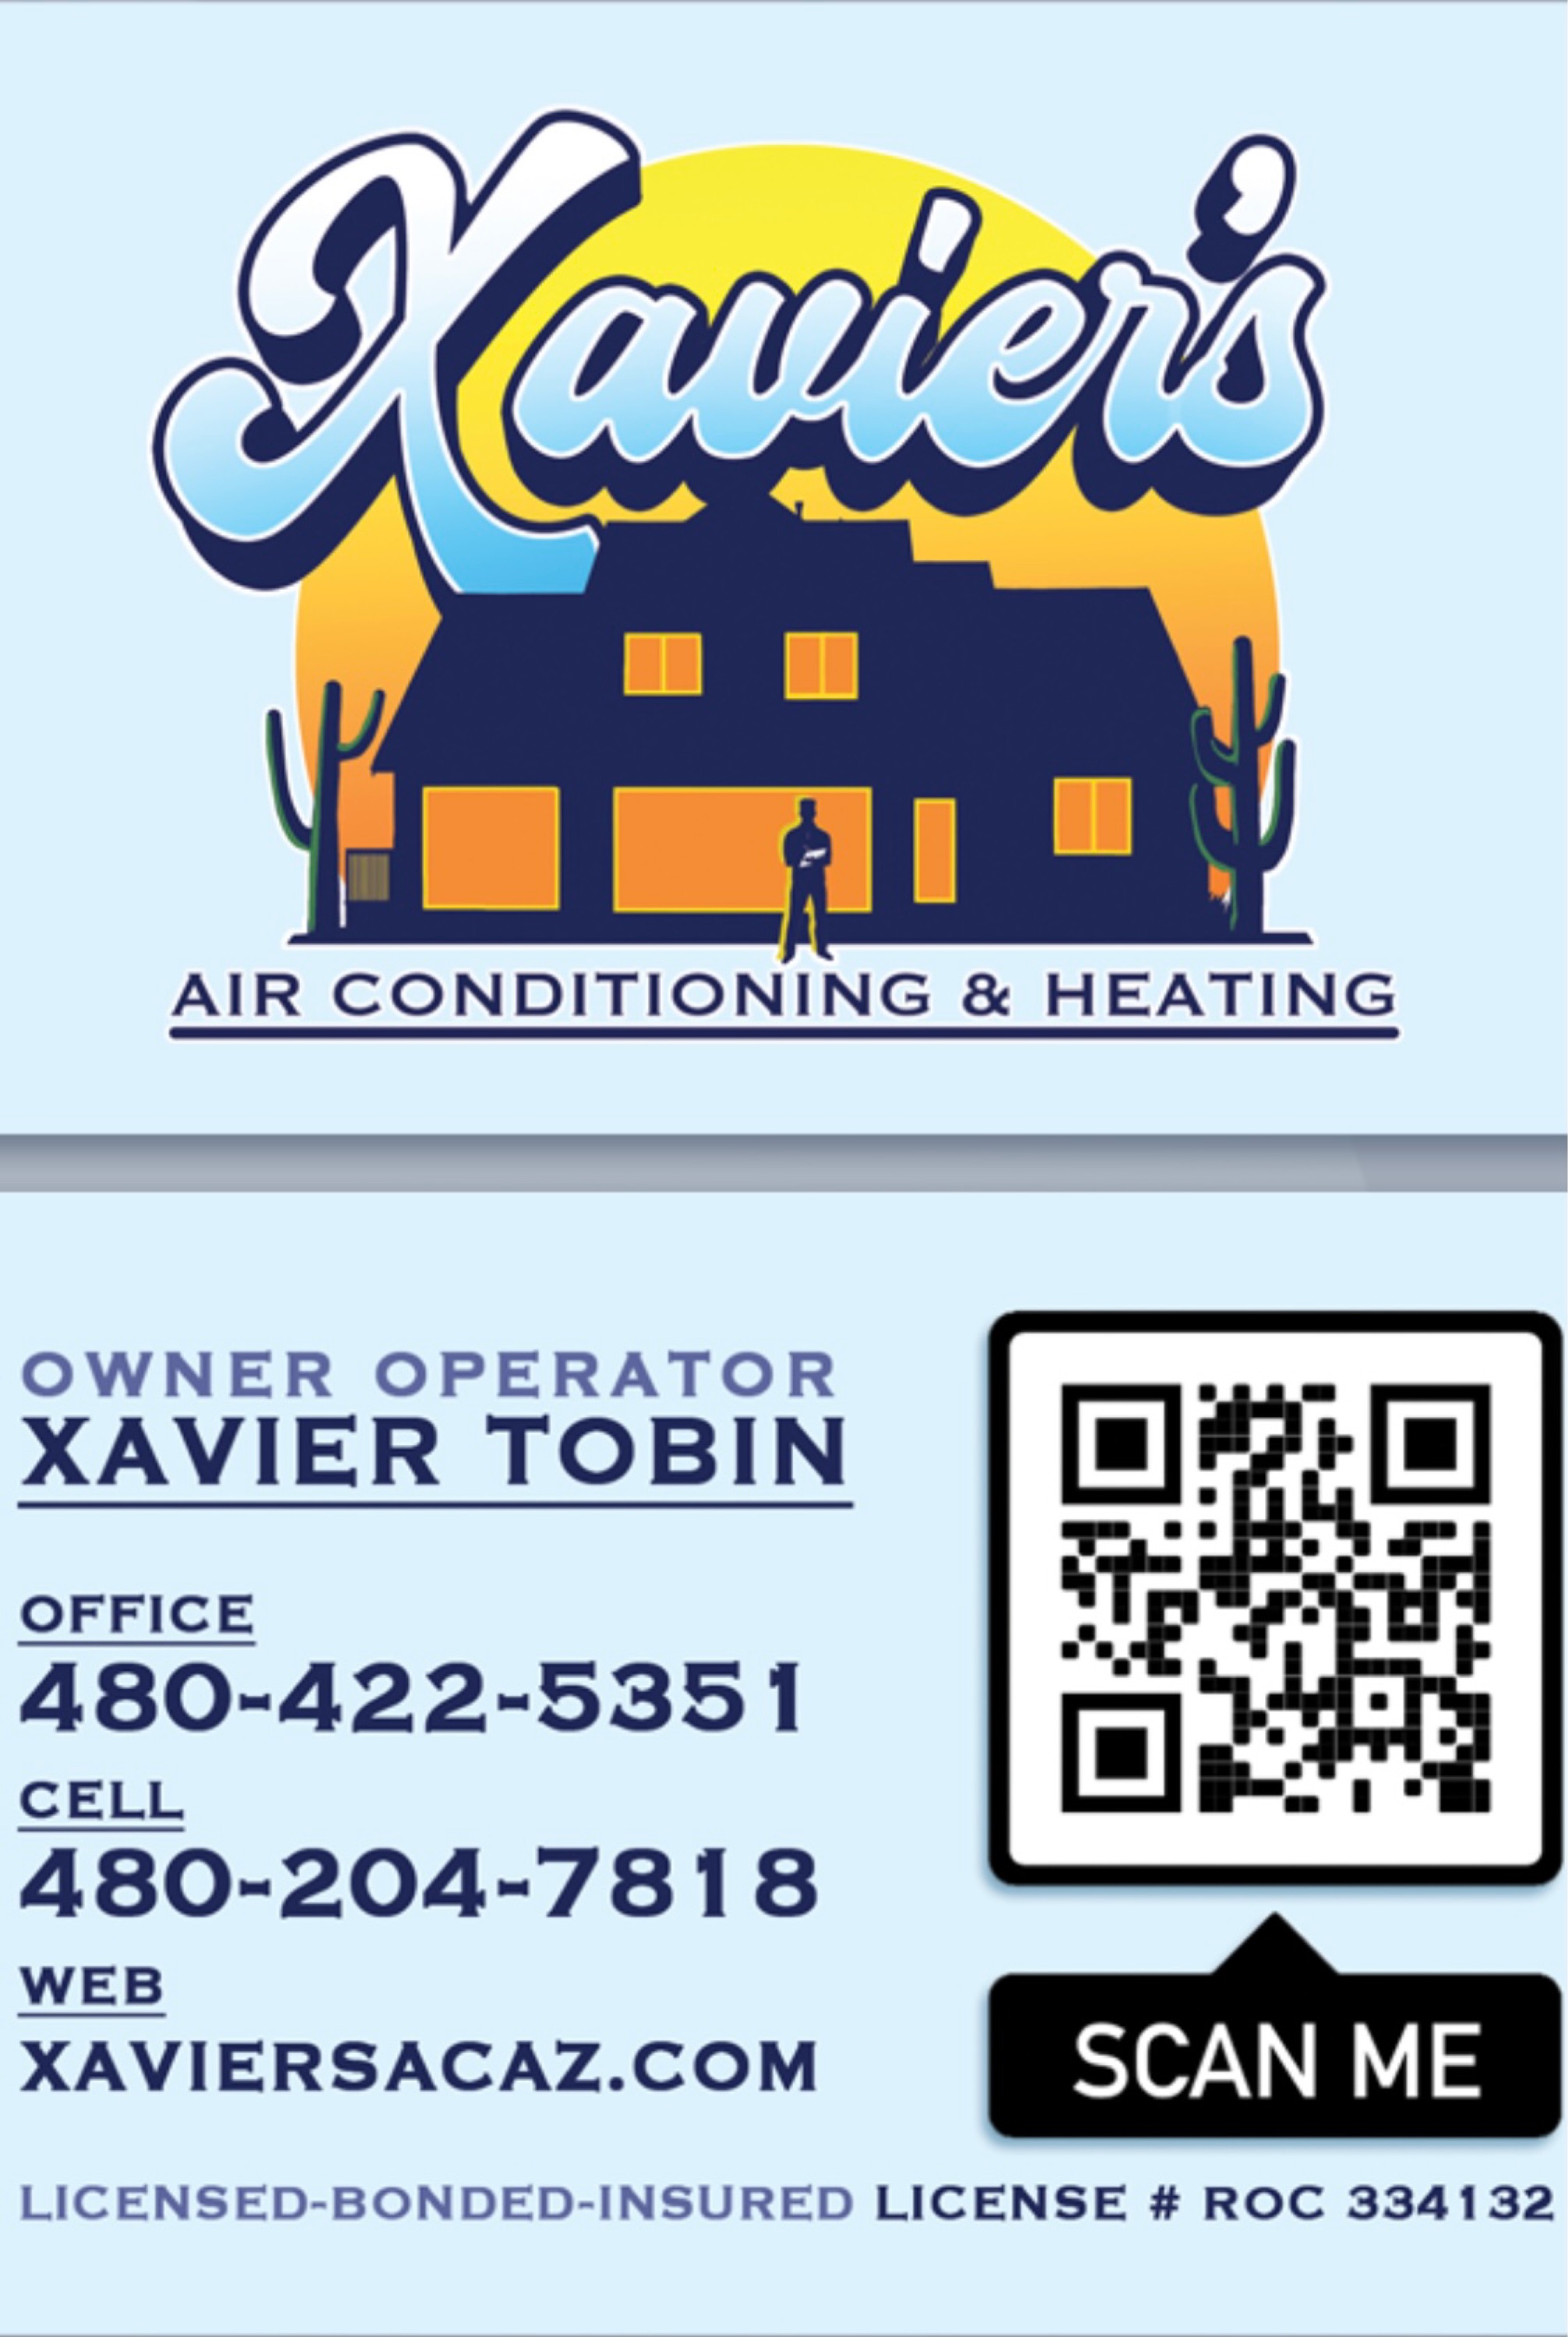 Xavier's AC & Heating Services Logo